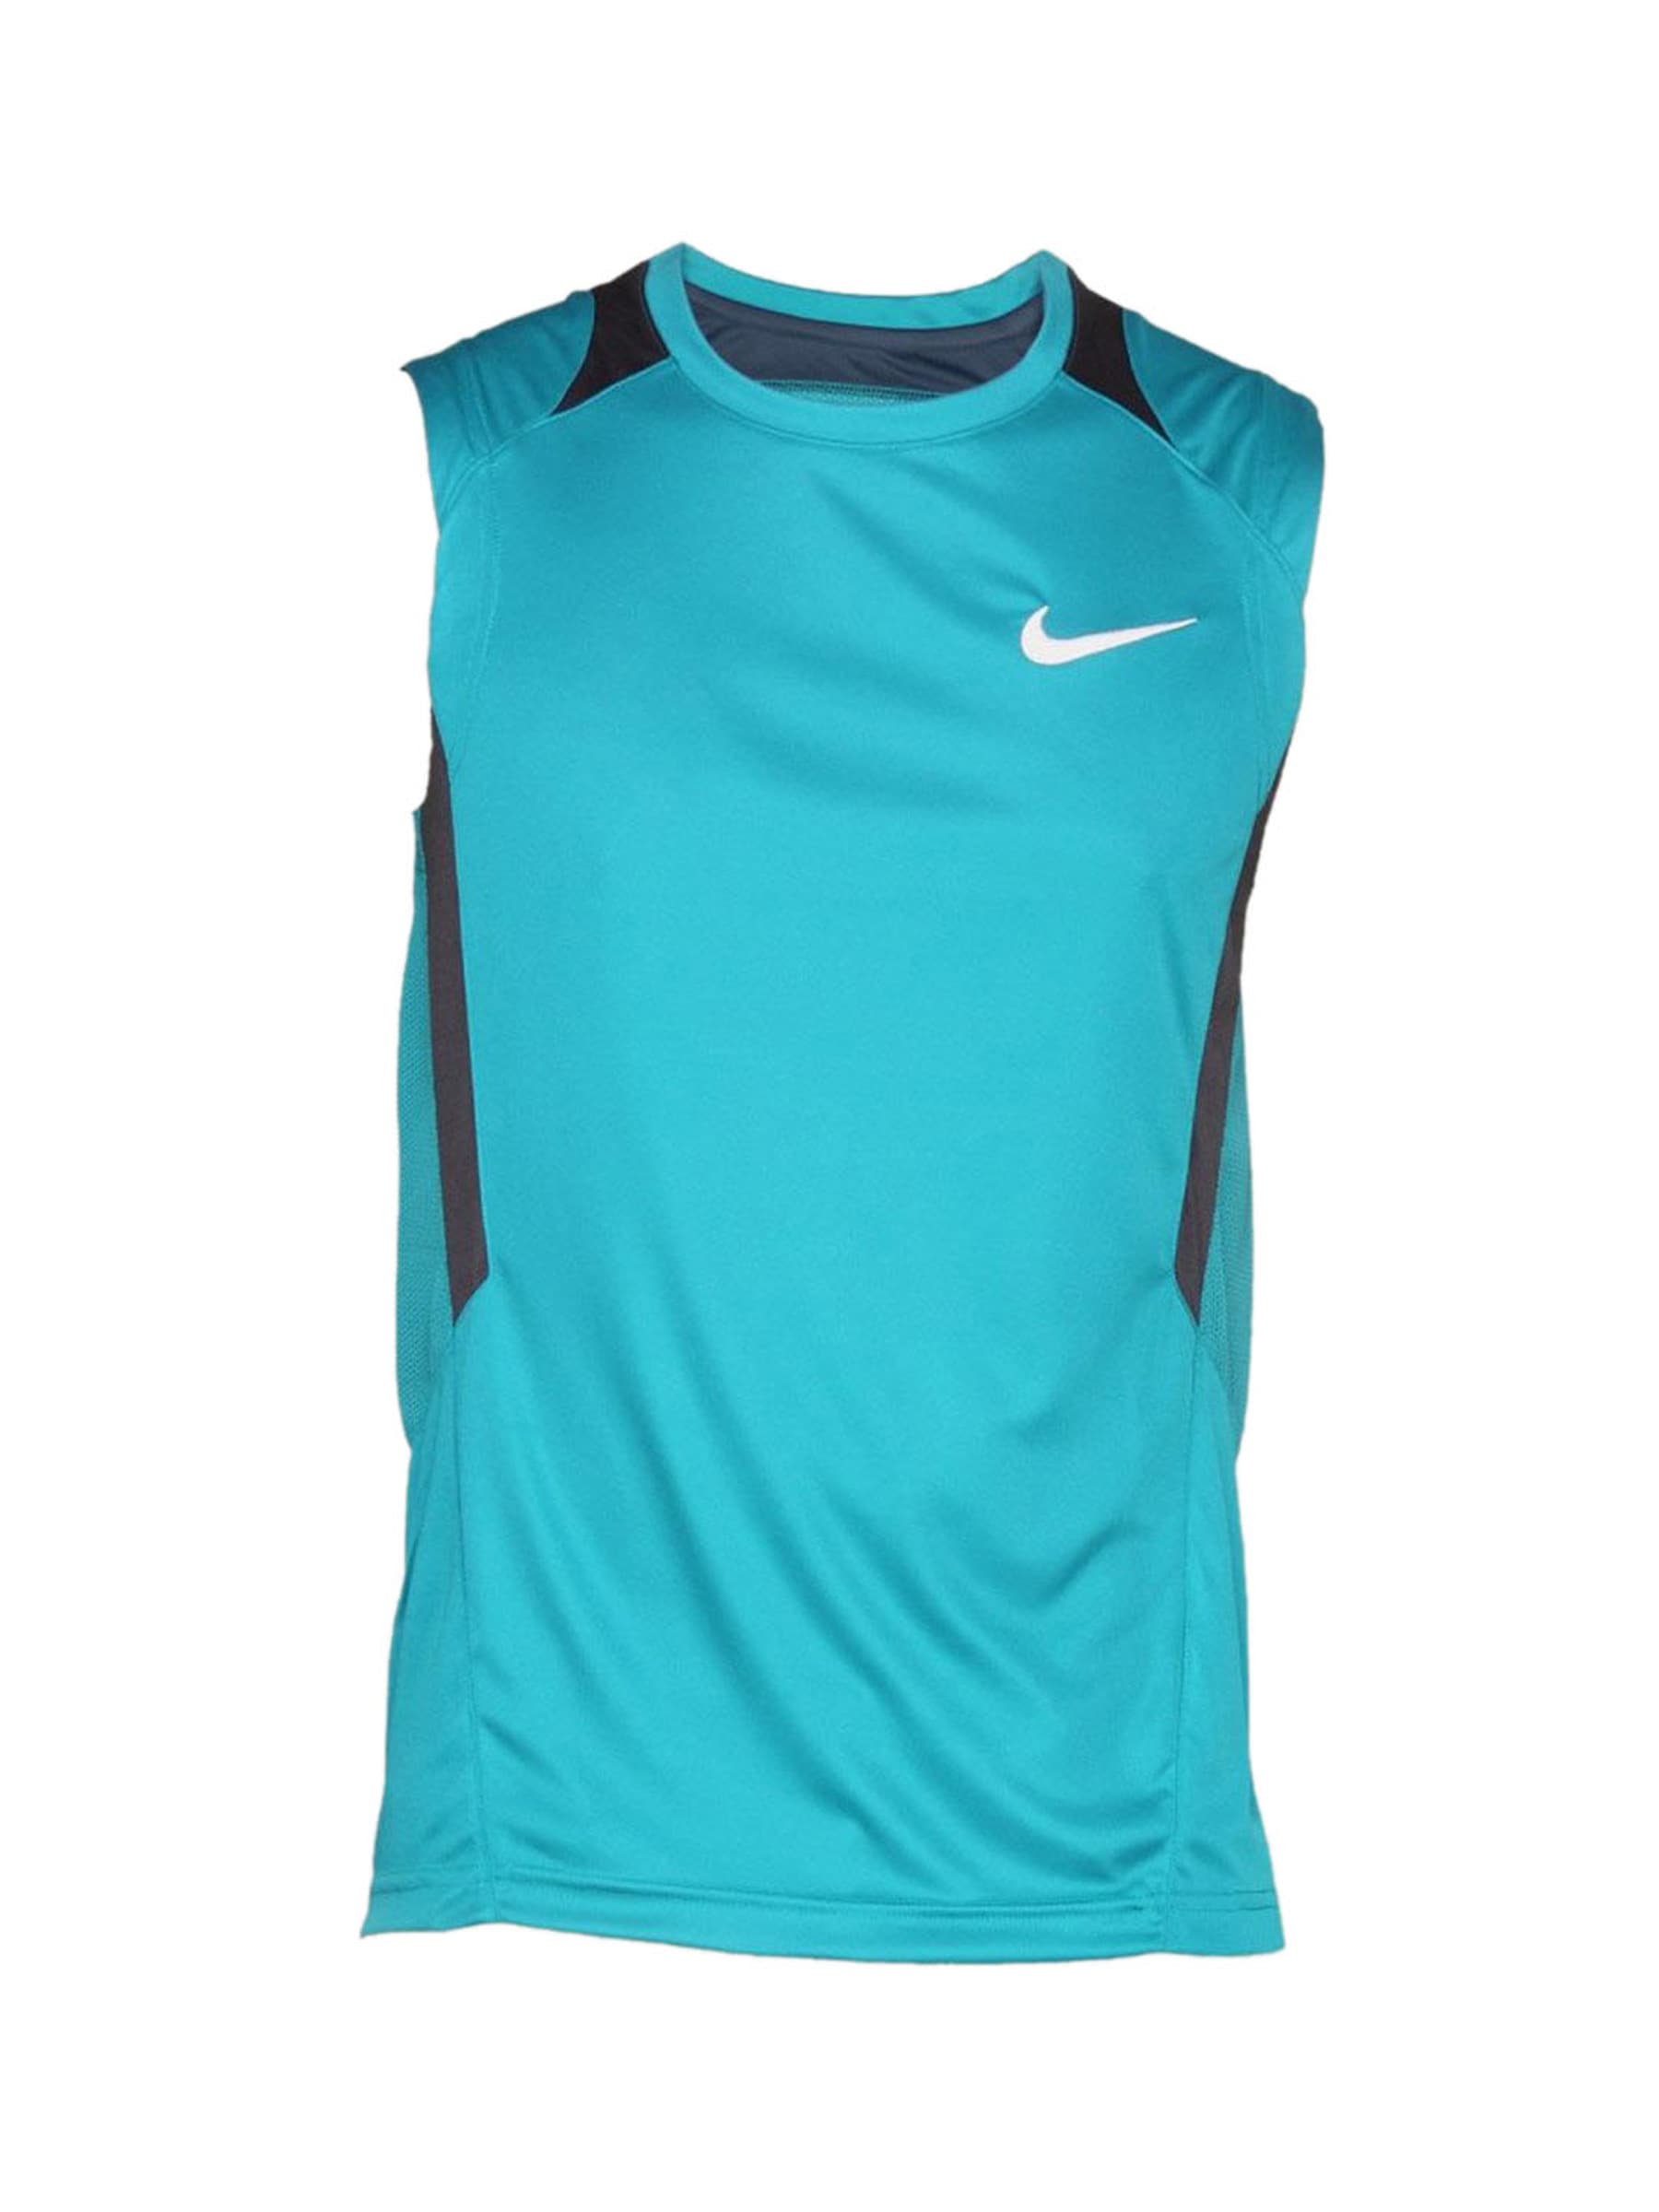 Nike Men's Training Blue T-shirt